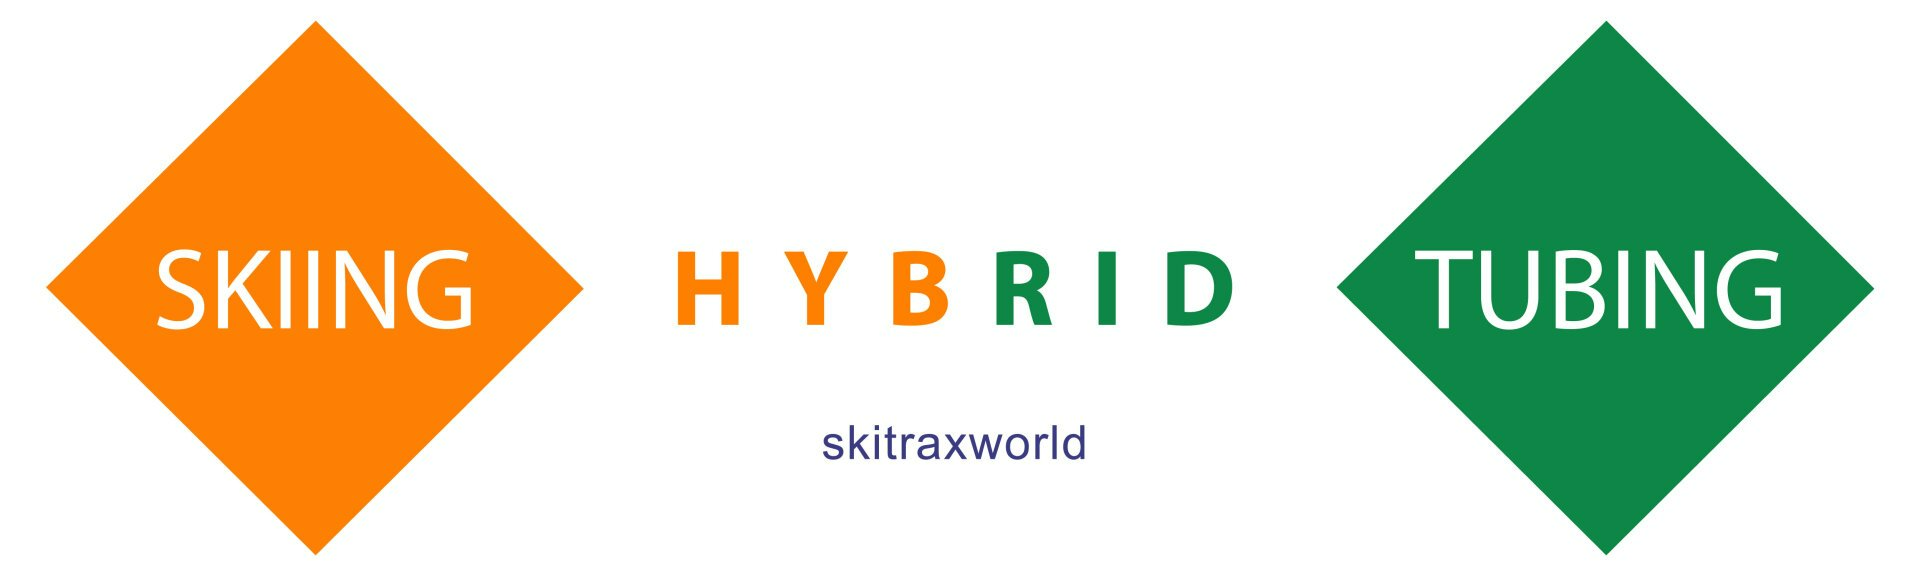 Hybrid Skiing, Tubing,  skitrax world